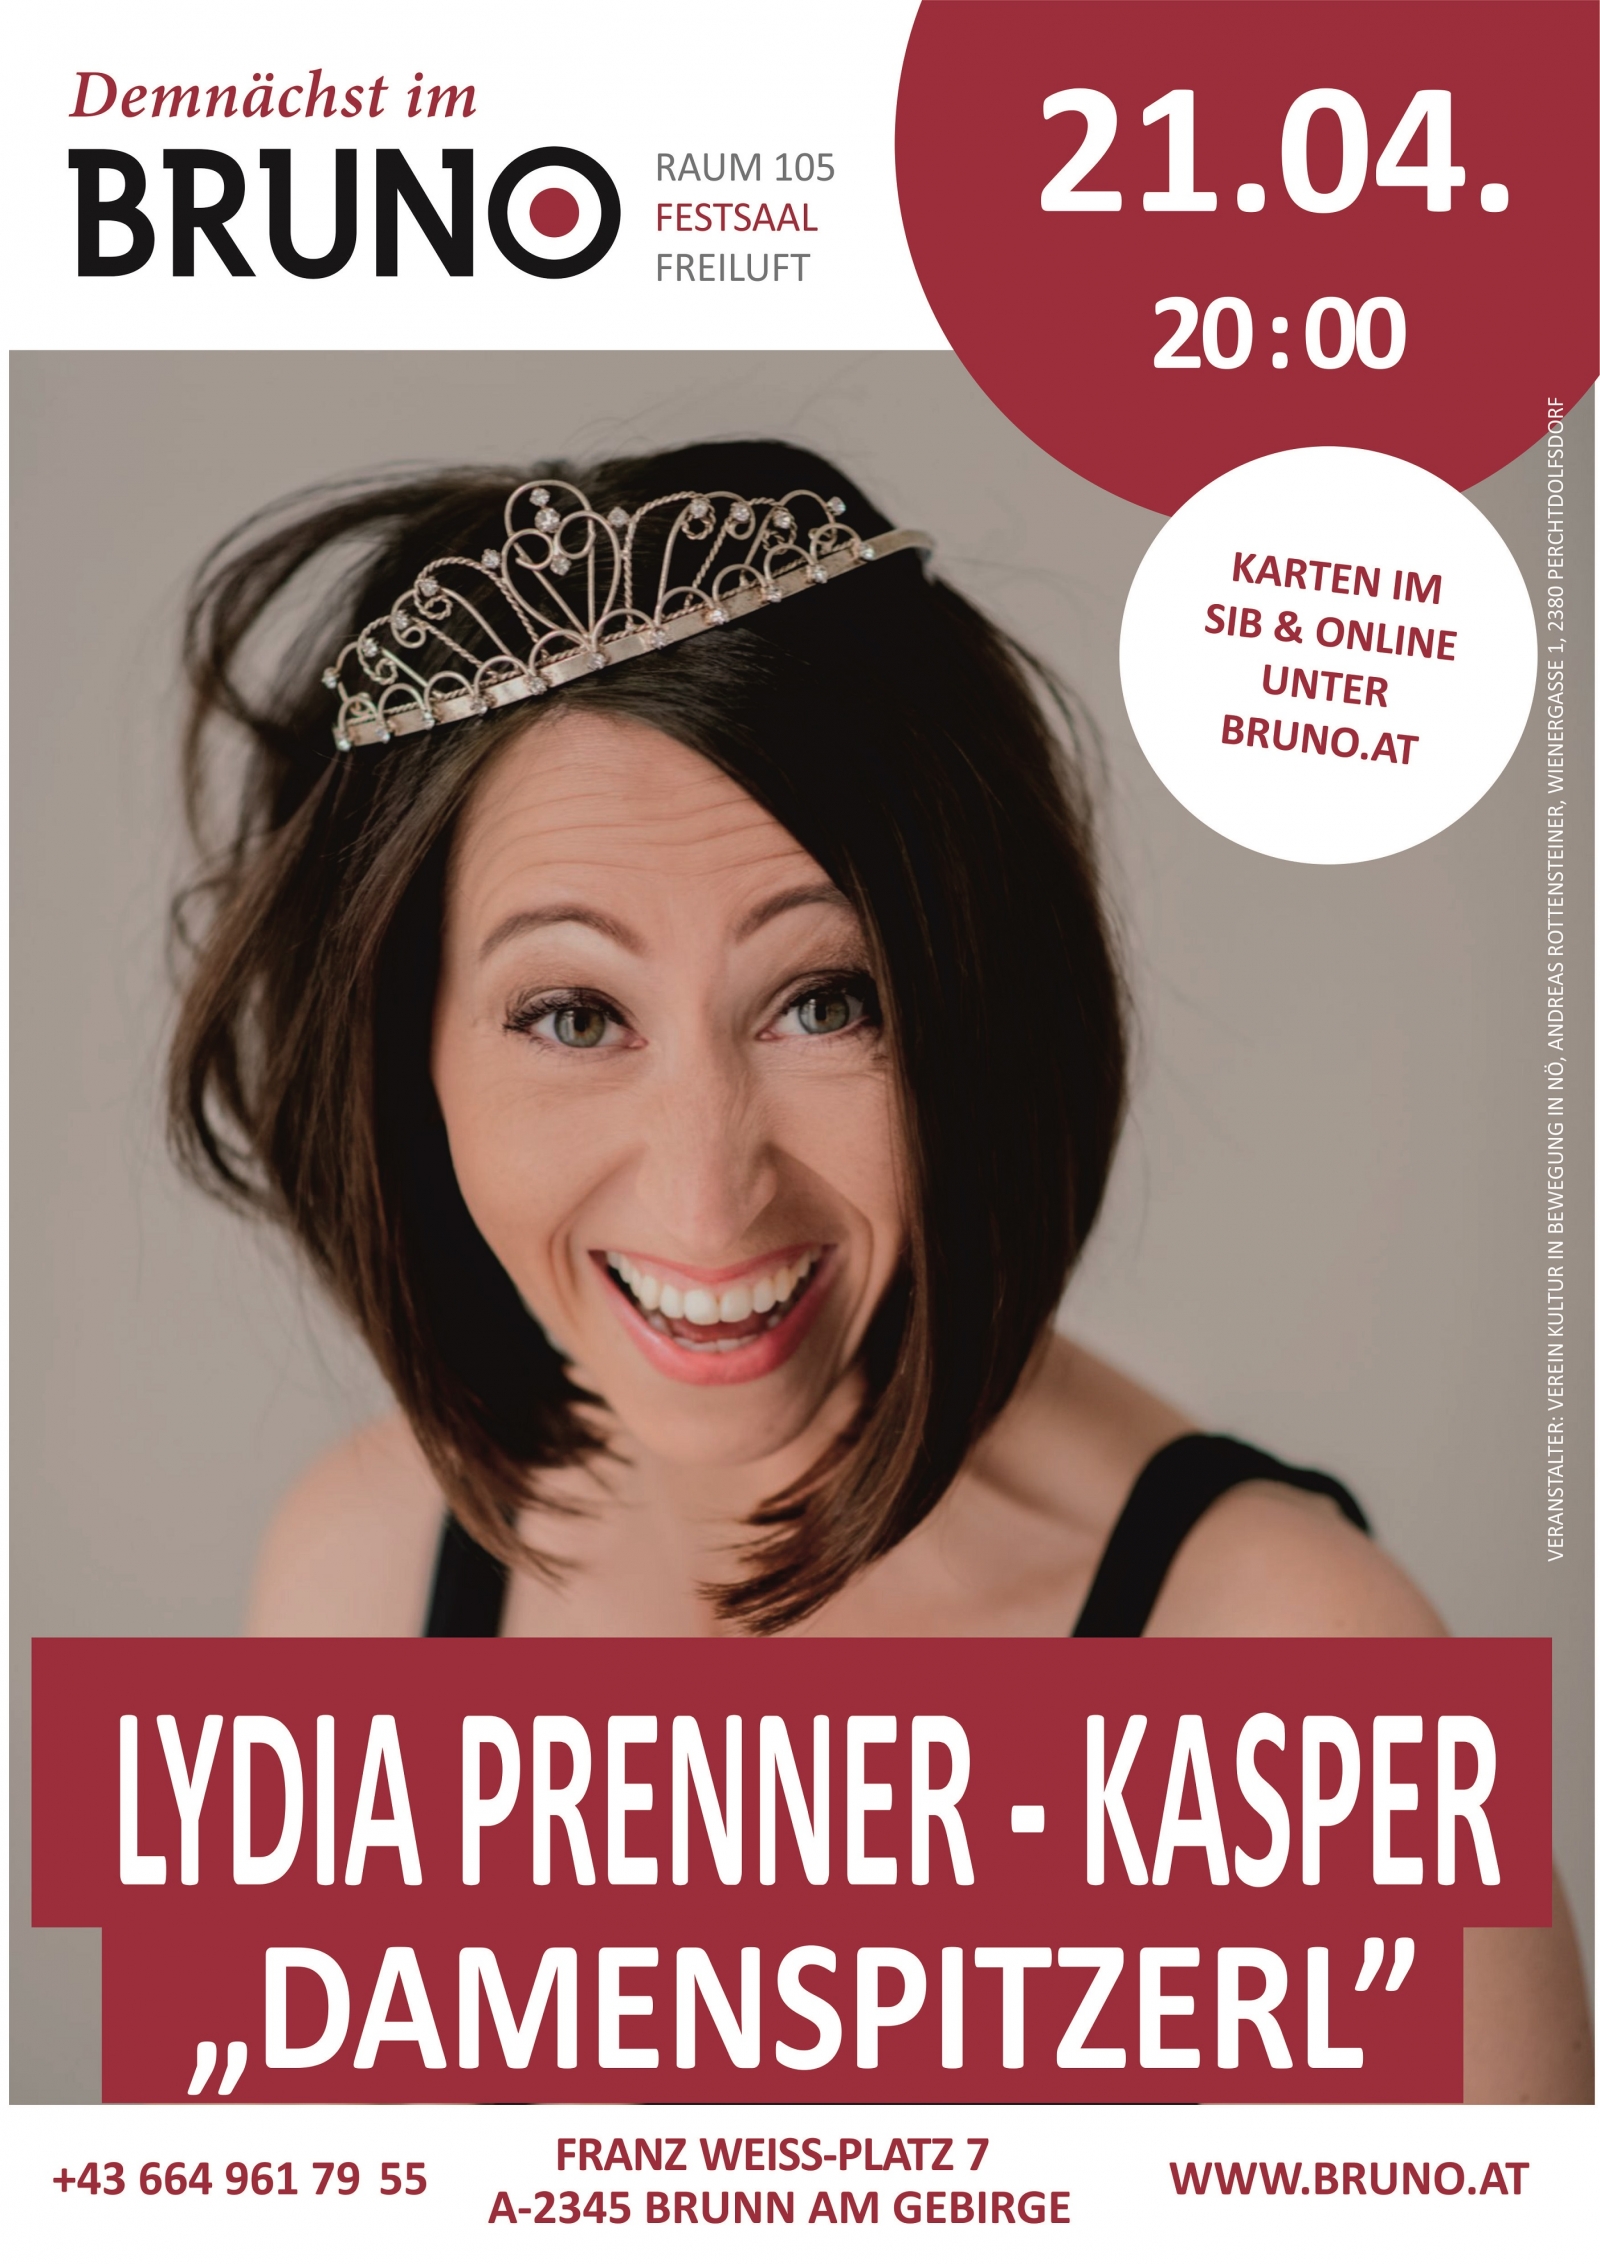 Lydia Prenner - Kasper Damenspitzerl